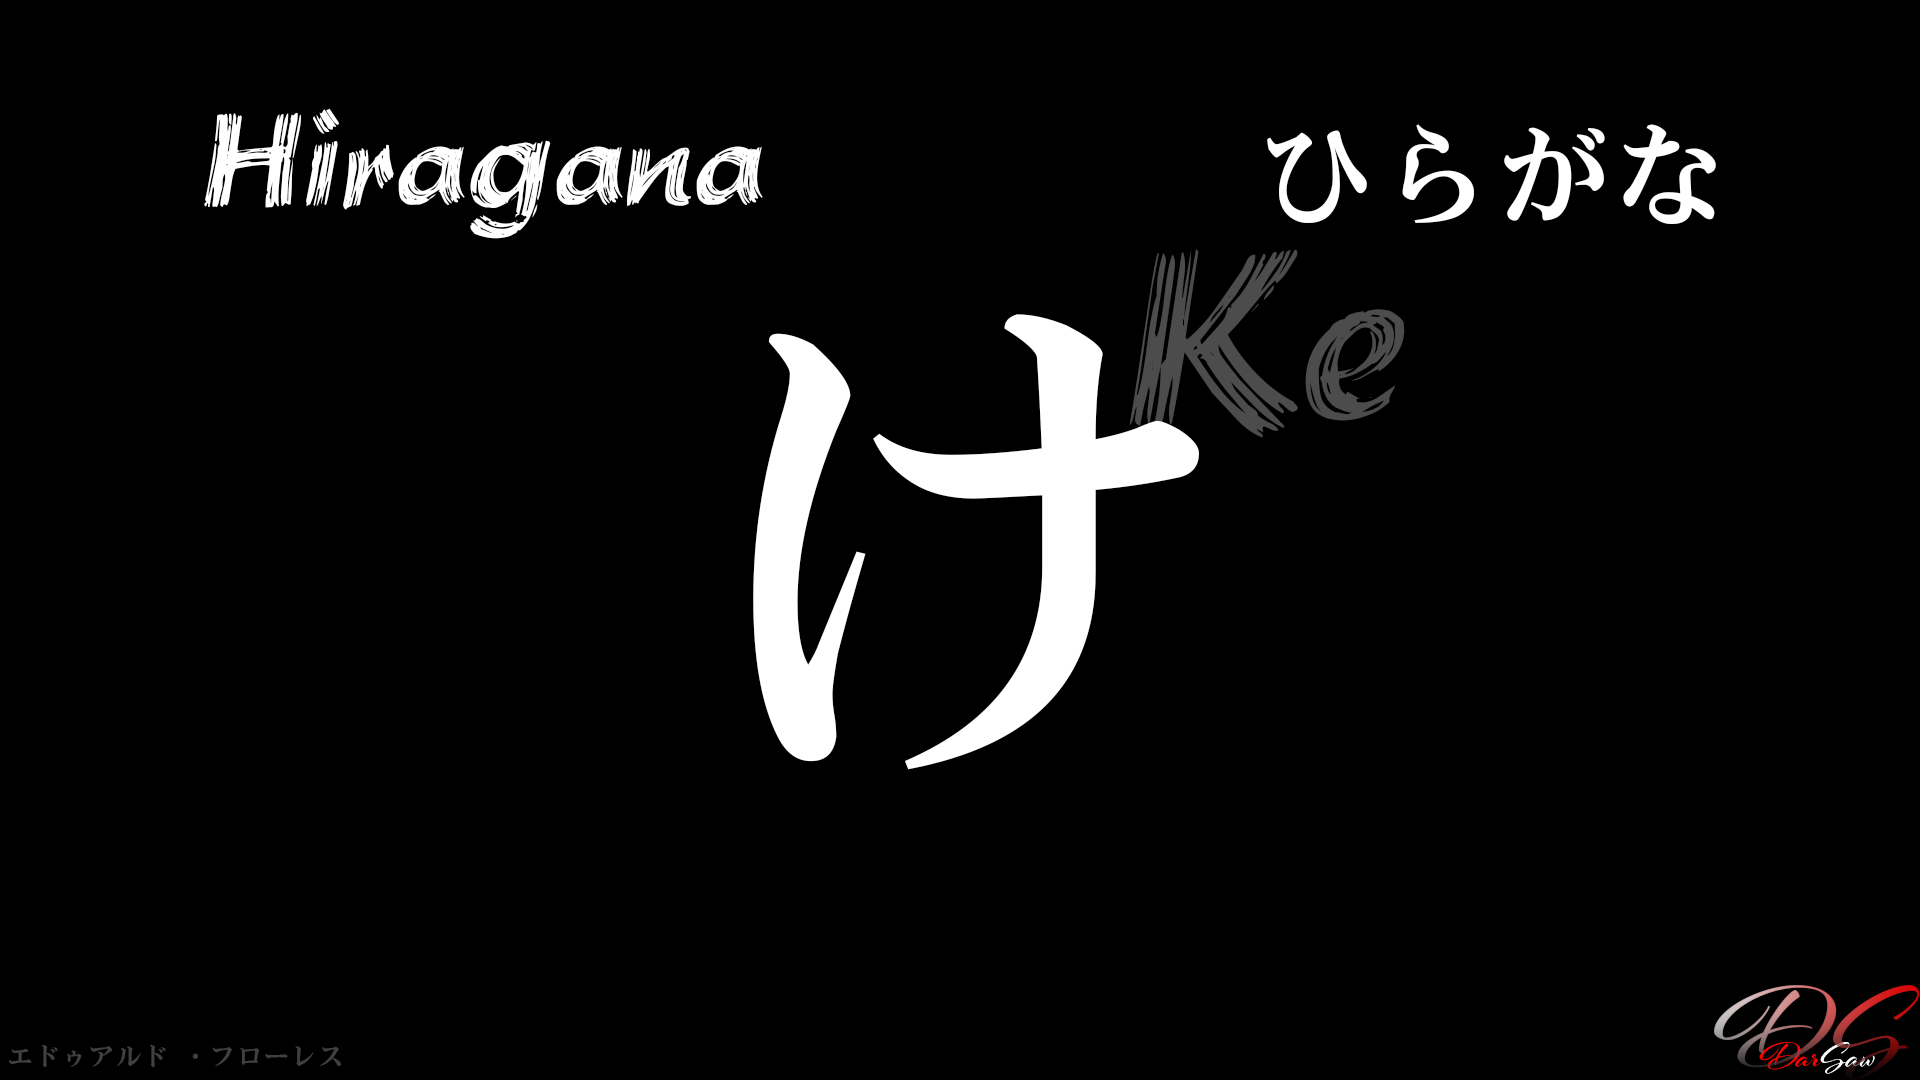 General 1920x1080 hiragana digital art simple background text watermarked Japanese black background